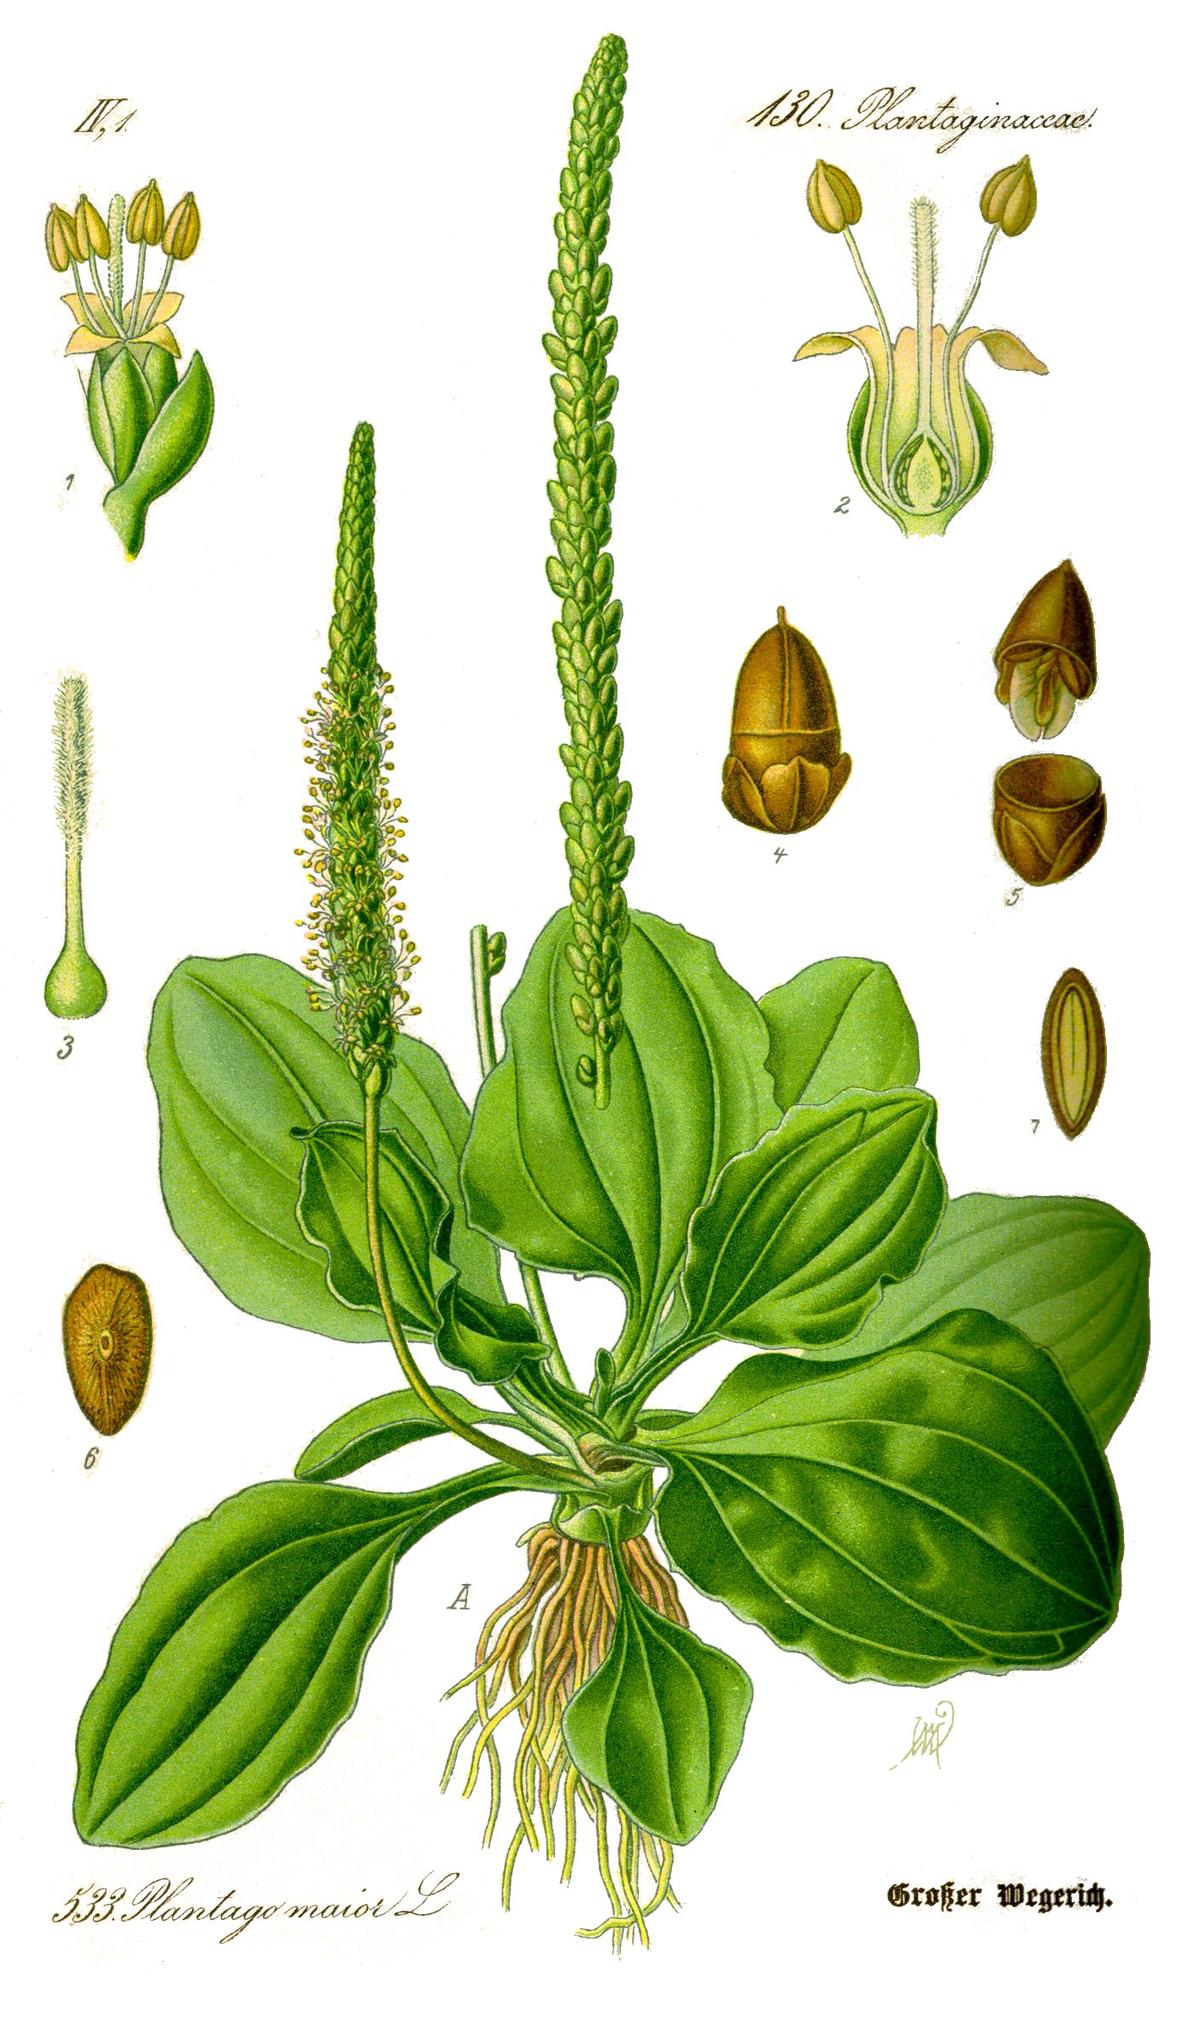 Broad leaf plantain (Plantago major). (Wikimedia Commons)